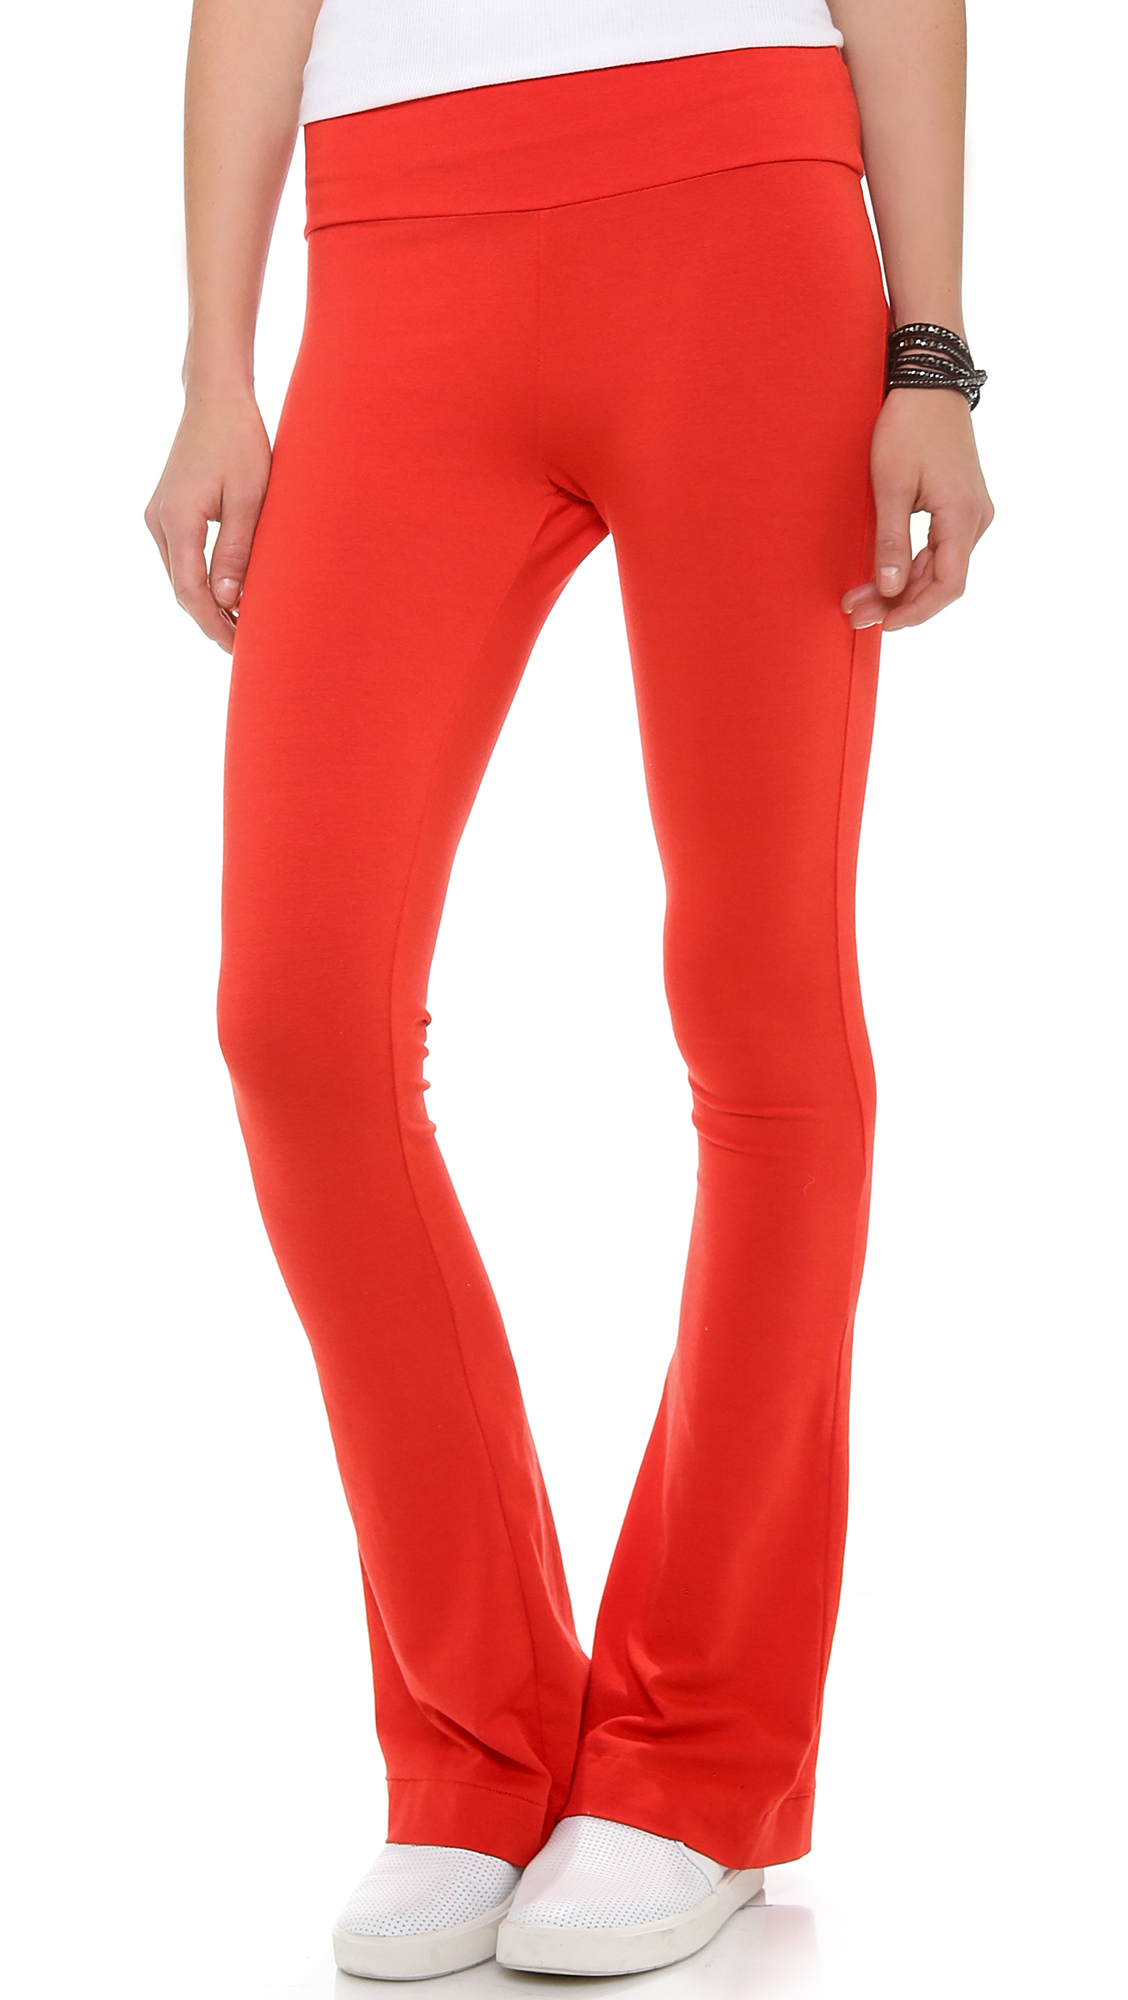 Red Yoga Pants | Pant So